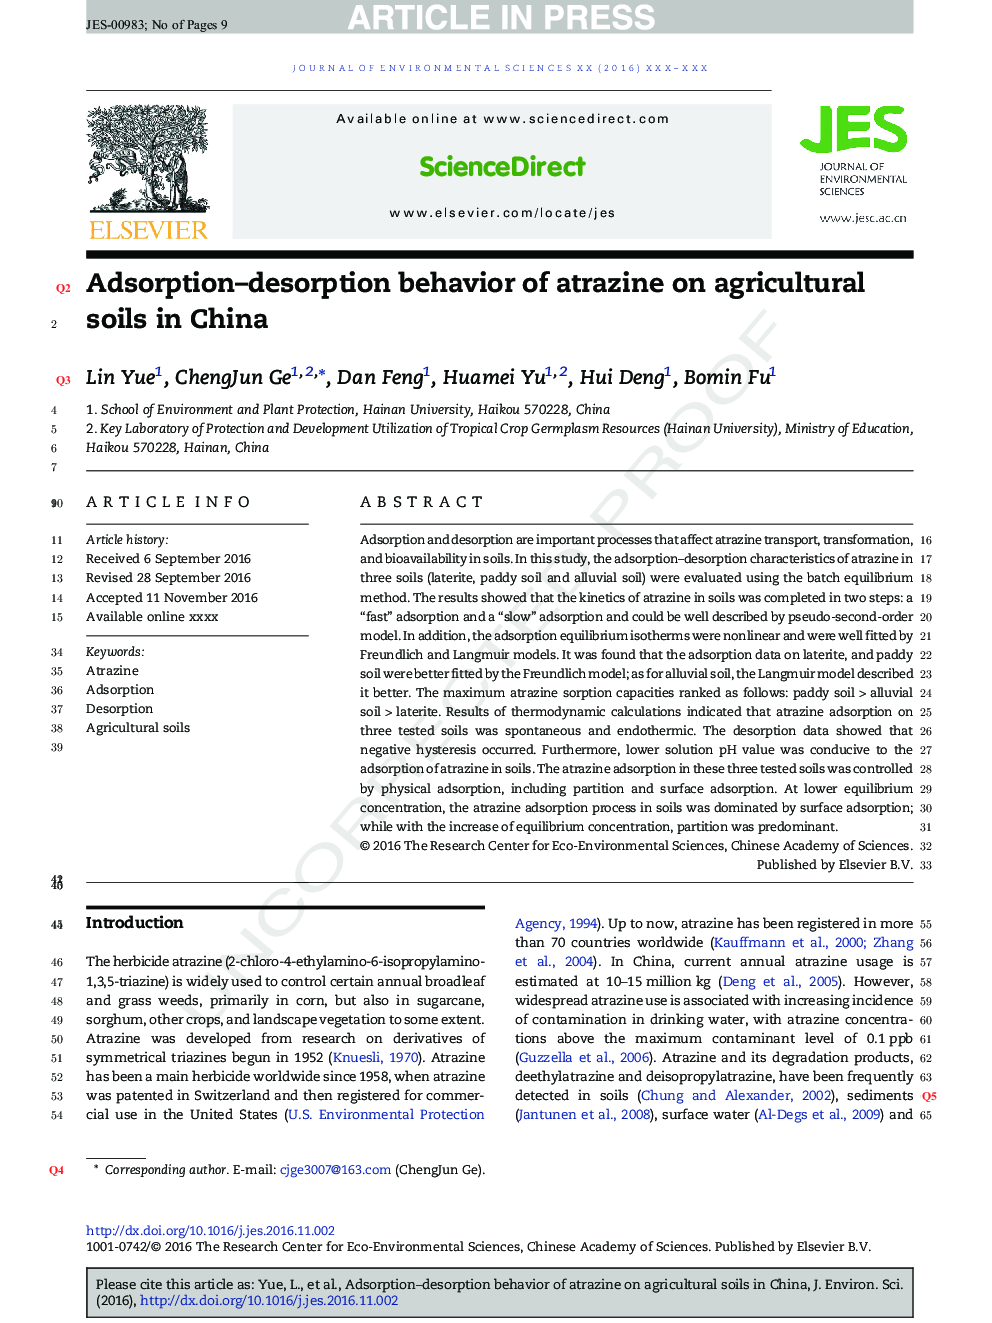 Adsorption-desorption behavior of atrazine on agricultural soils in China